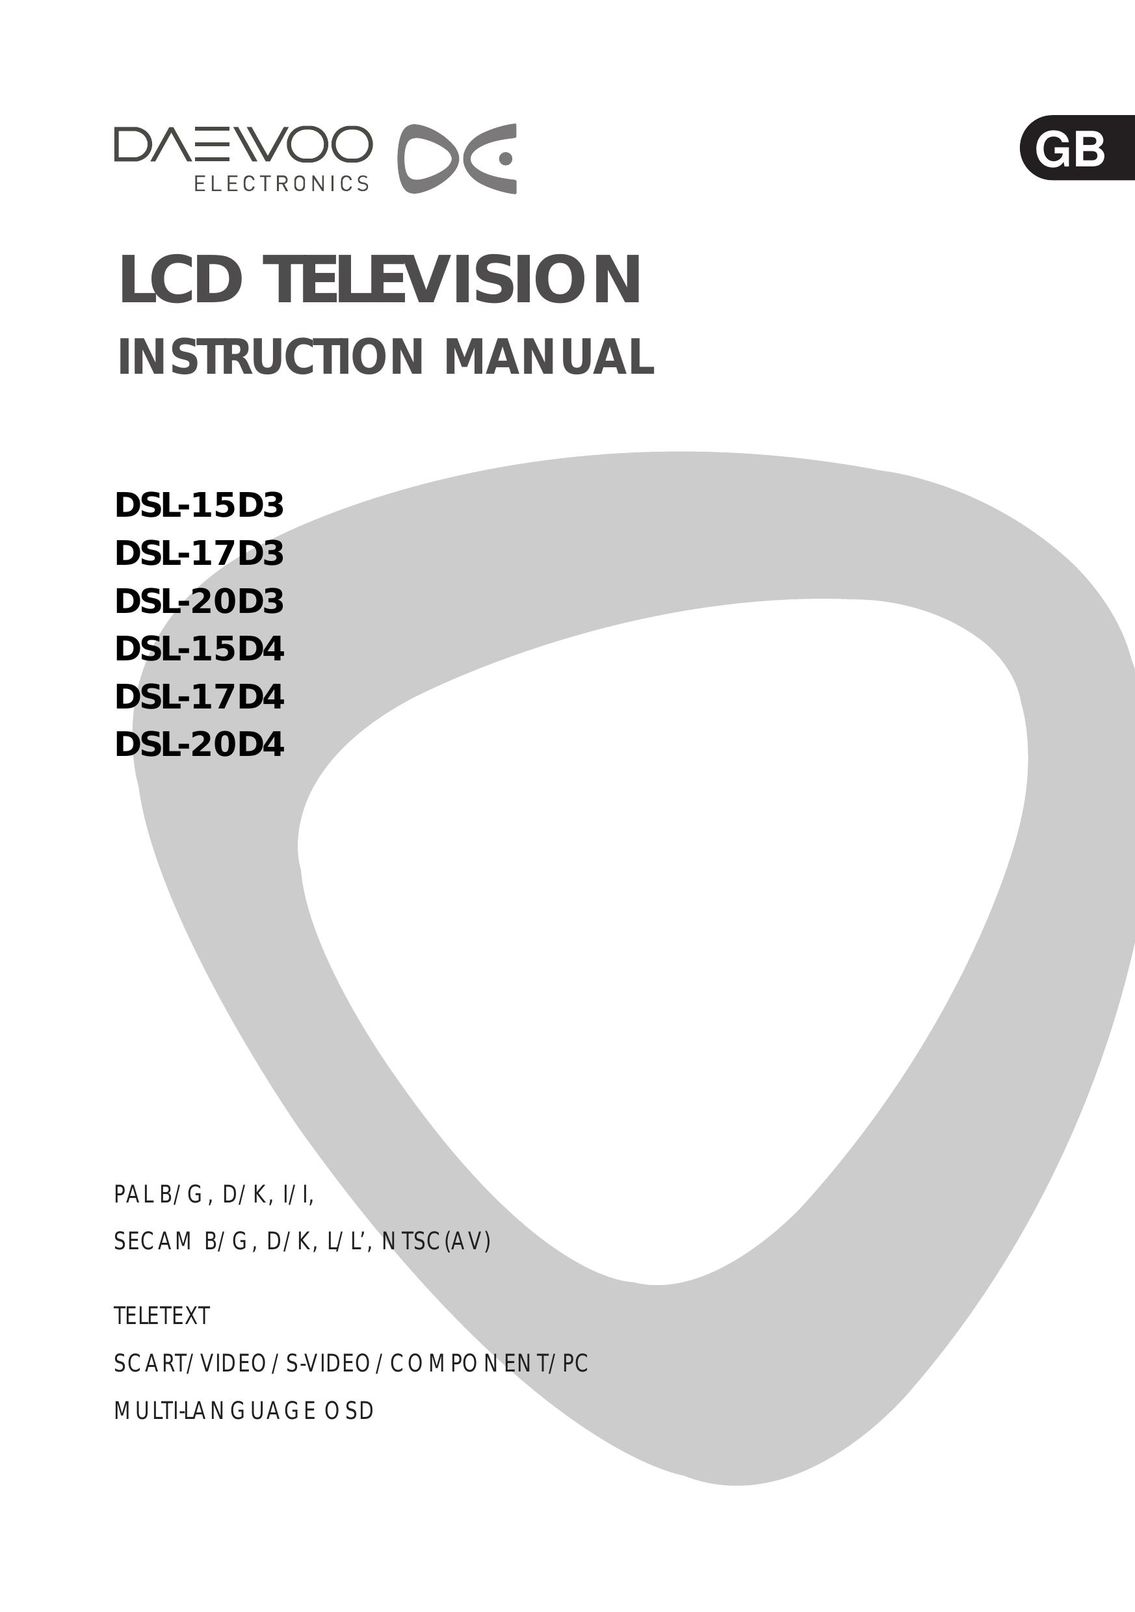 Daewoo DSL-15D3 Flat Panel Television User Manual